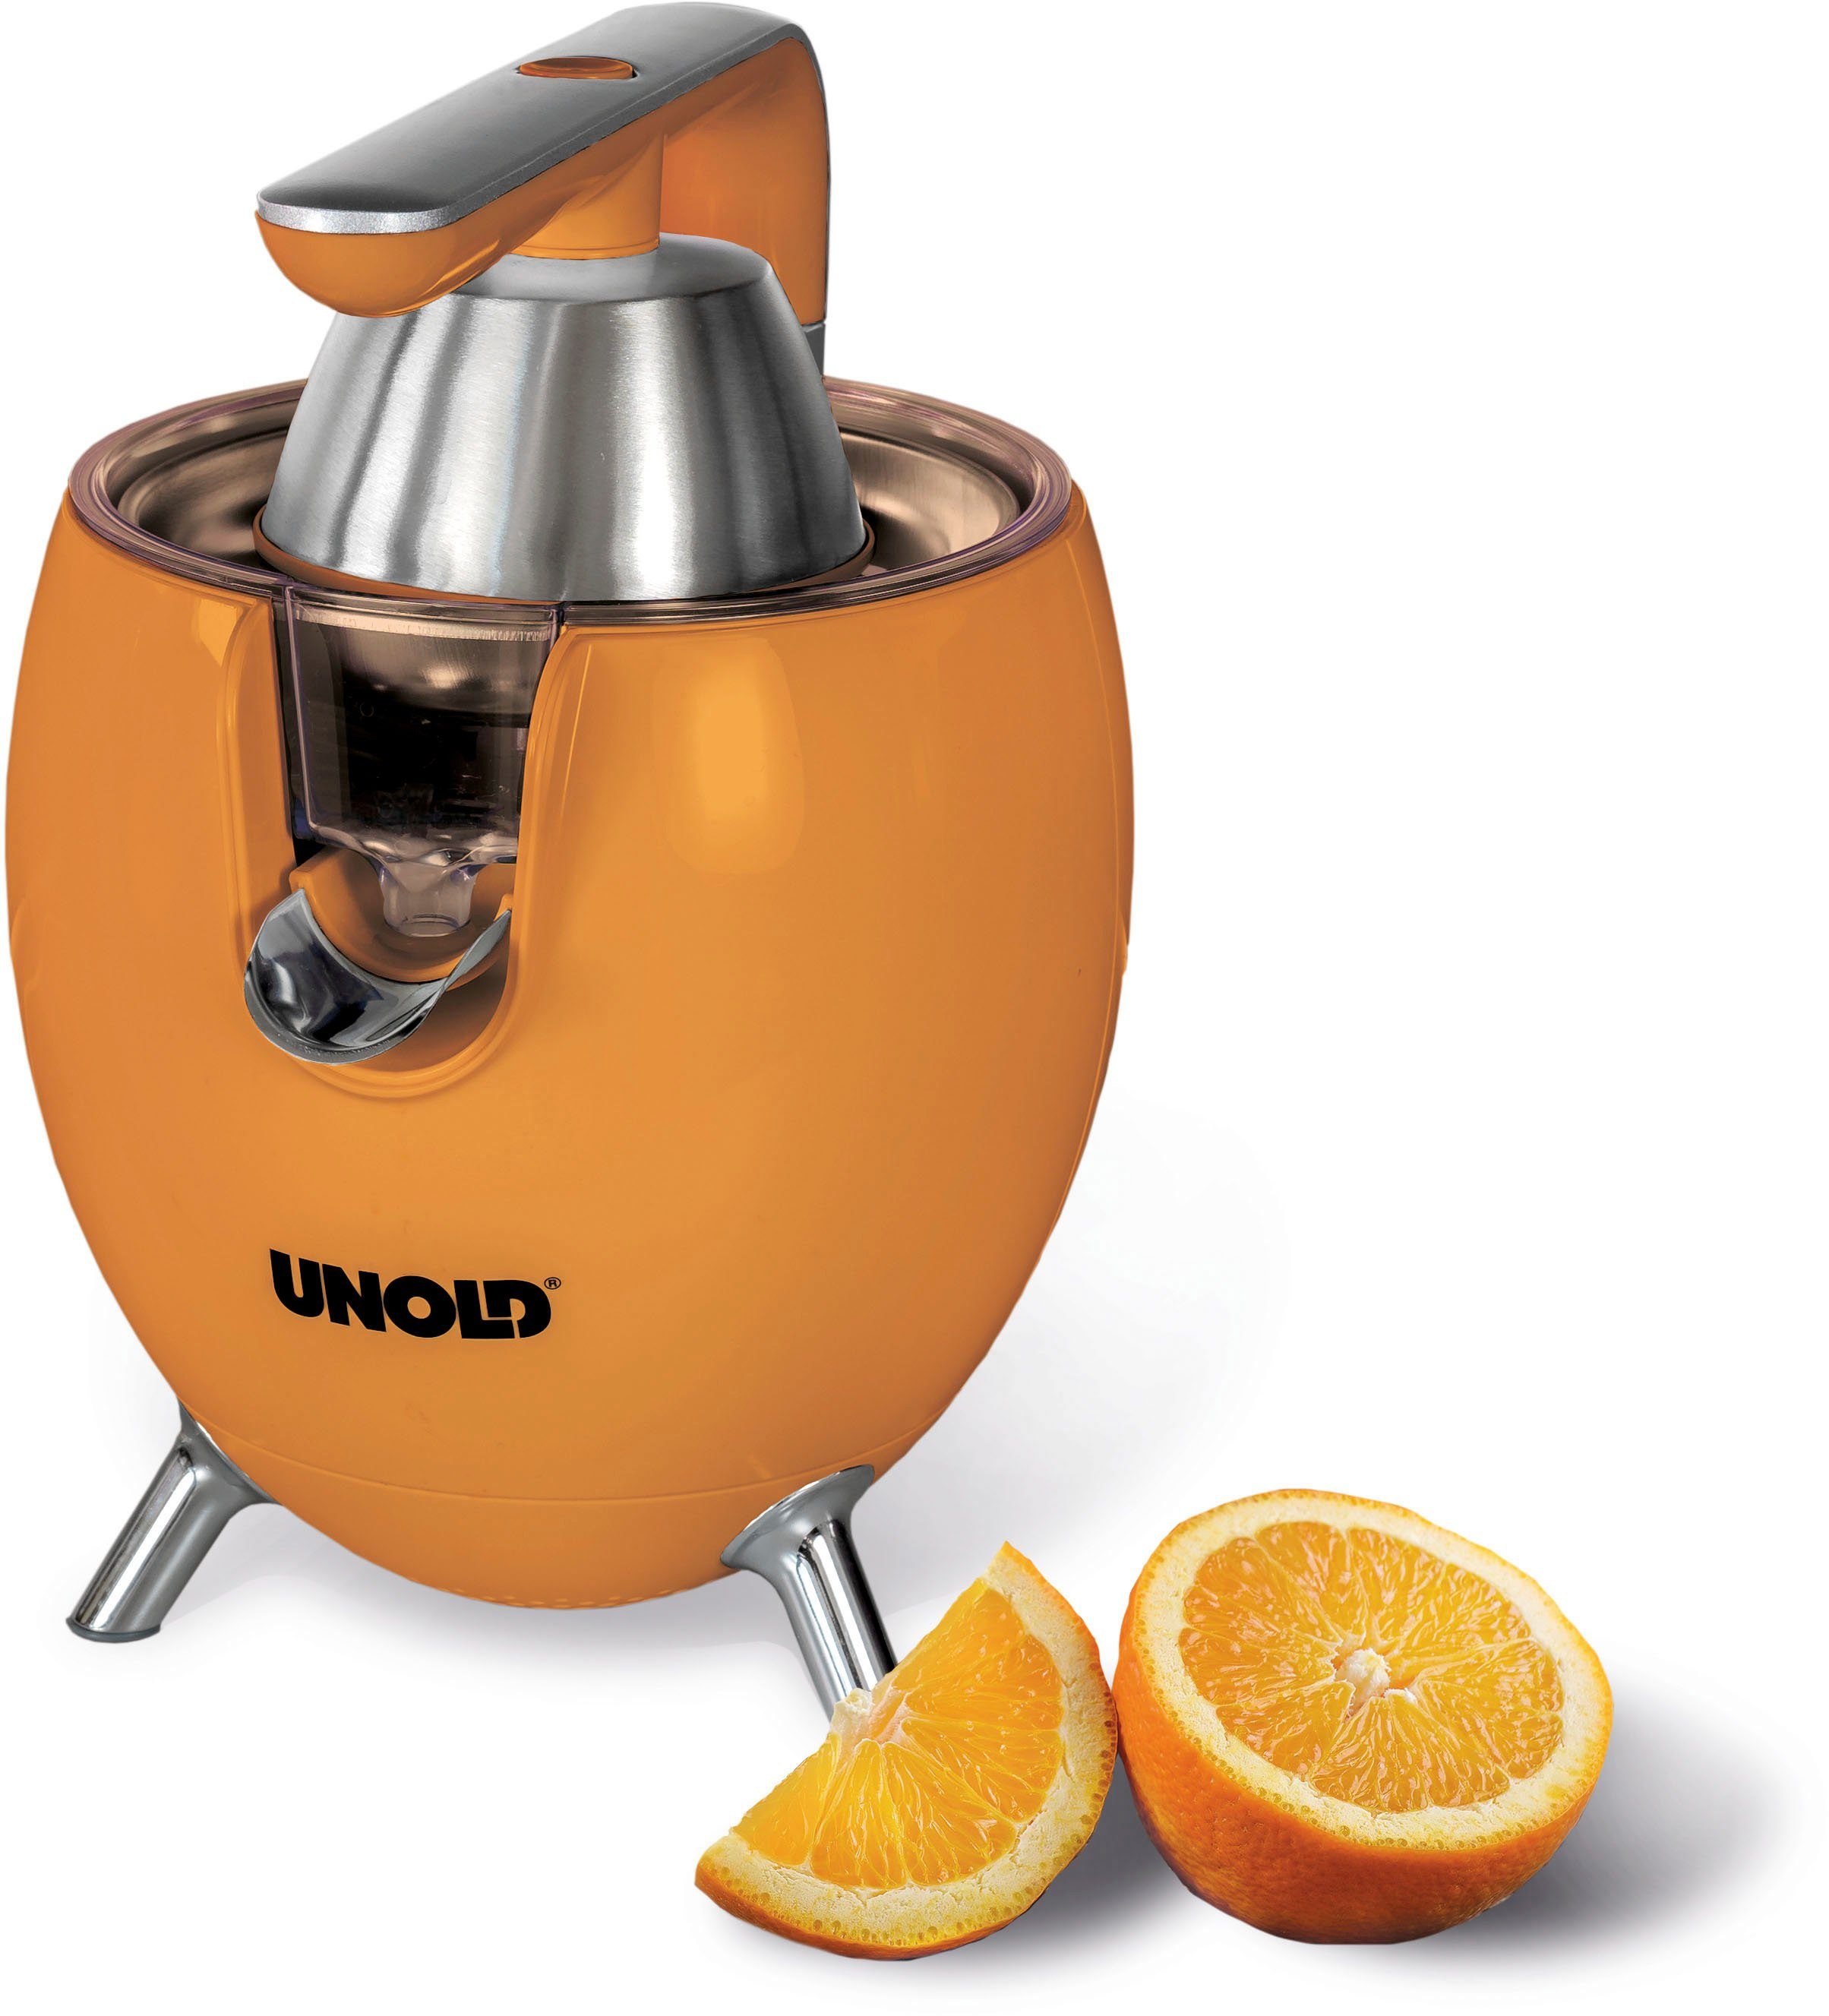 300 Power Unold Orange, 78133 W Zitruspresse Juicy